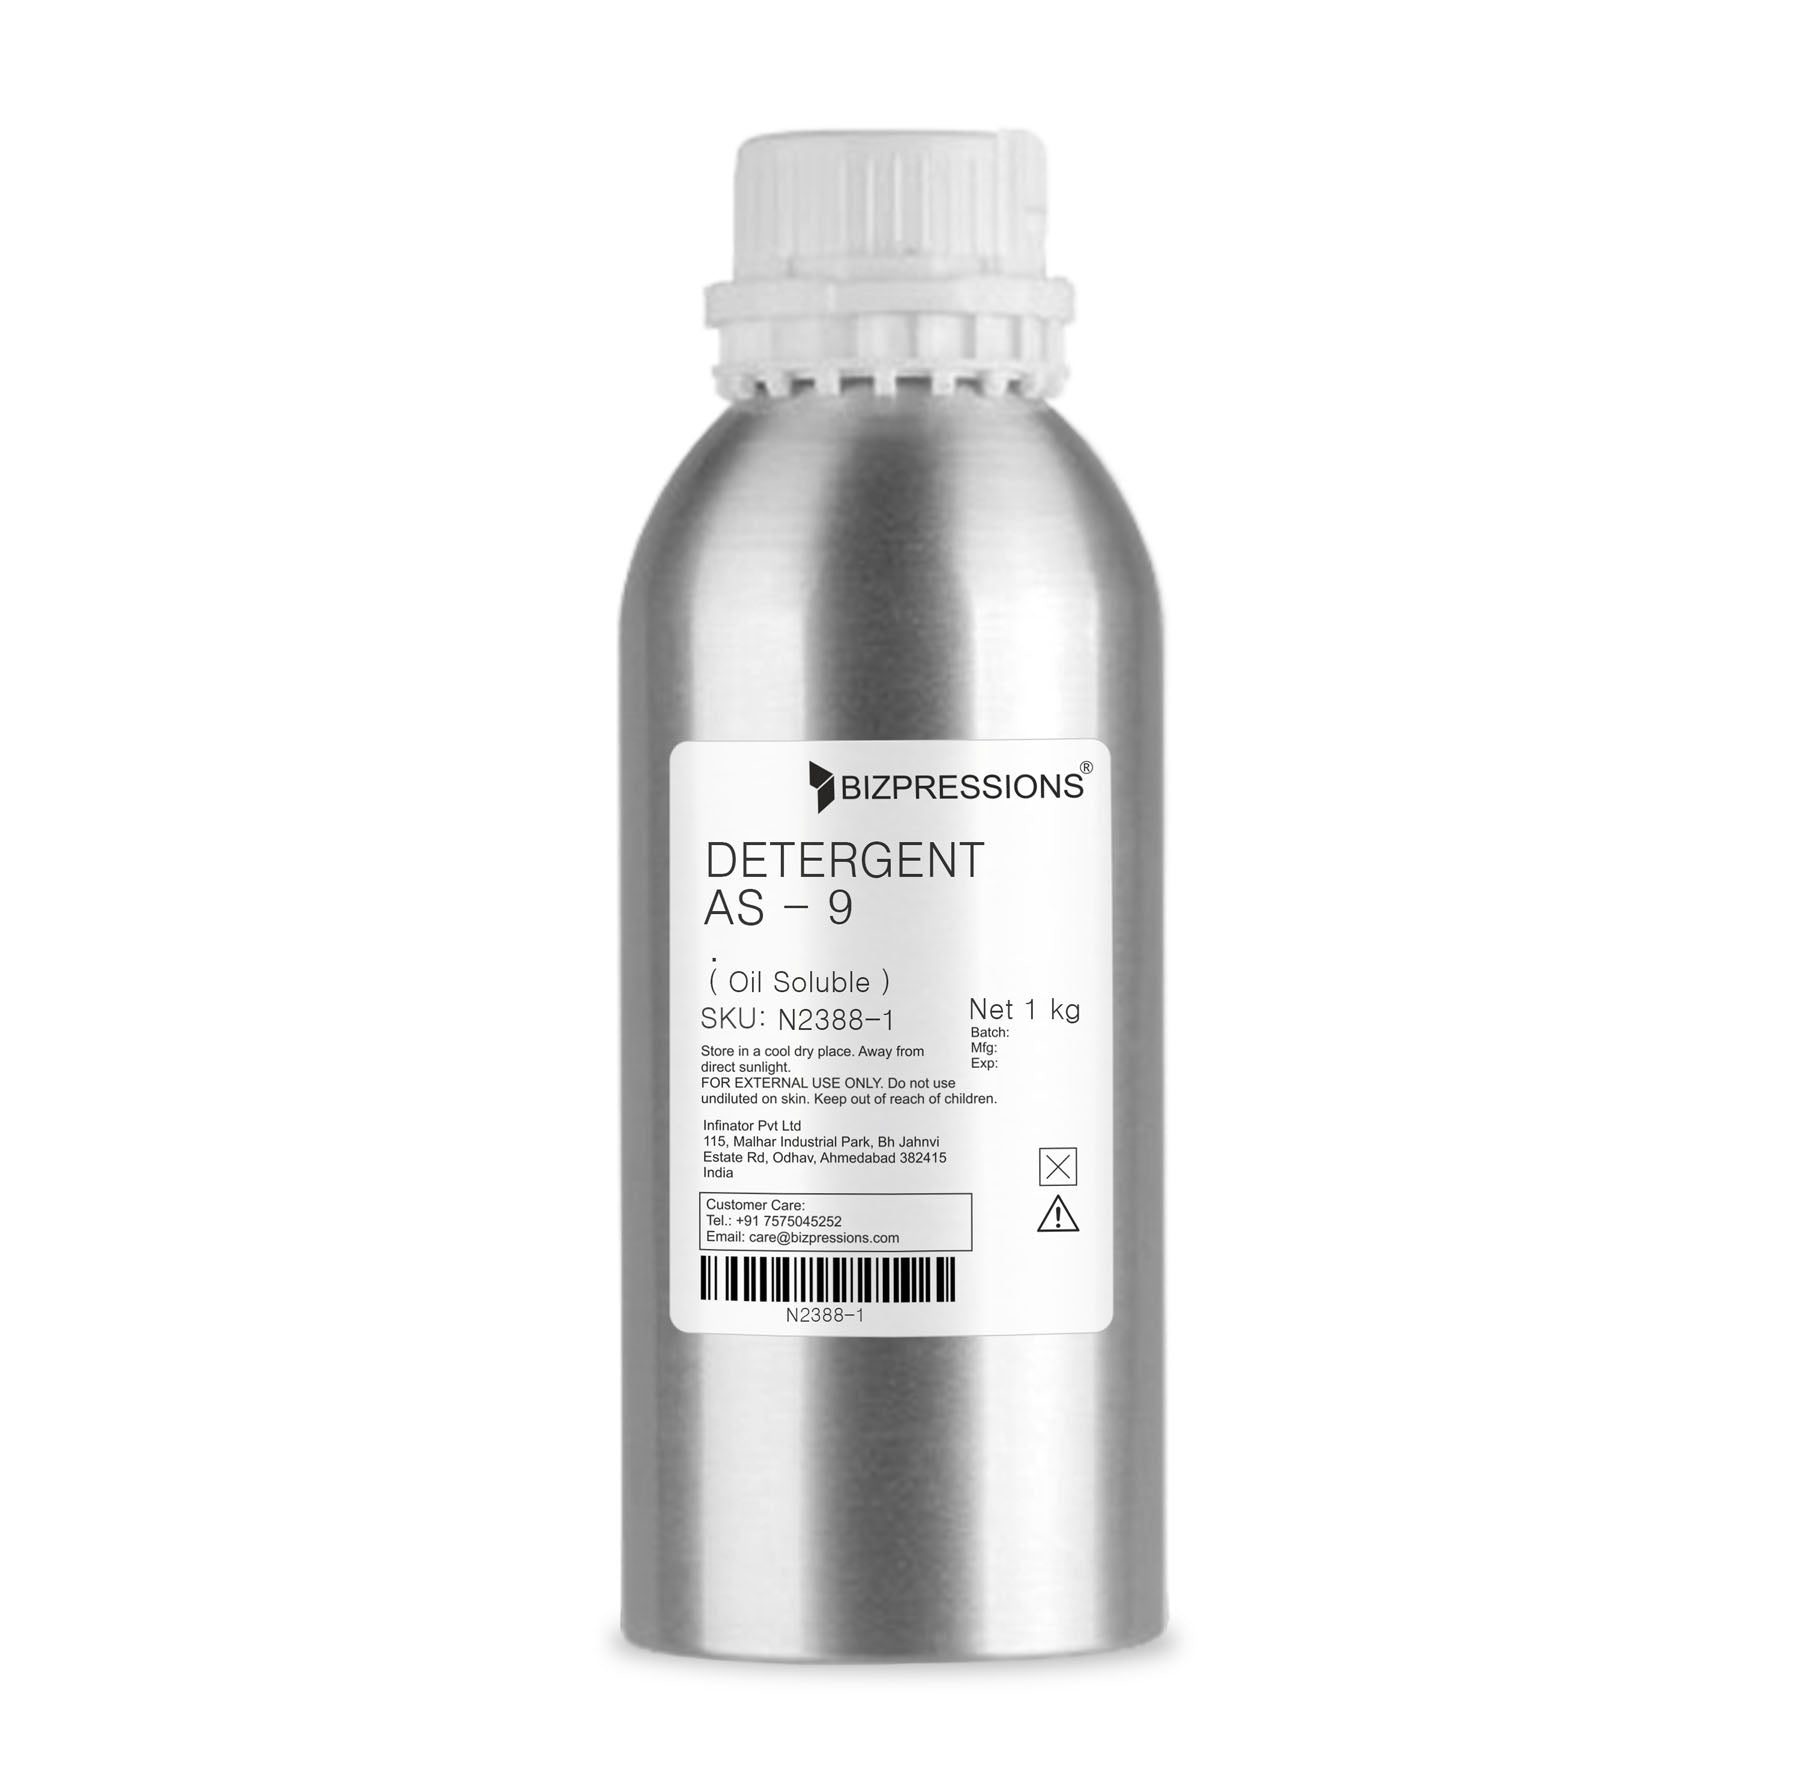 DETERGENT AS - 9 - Fragrance ( Oil Soluble ) - 1 kg